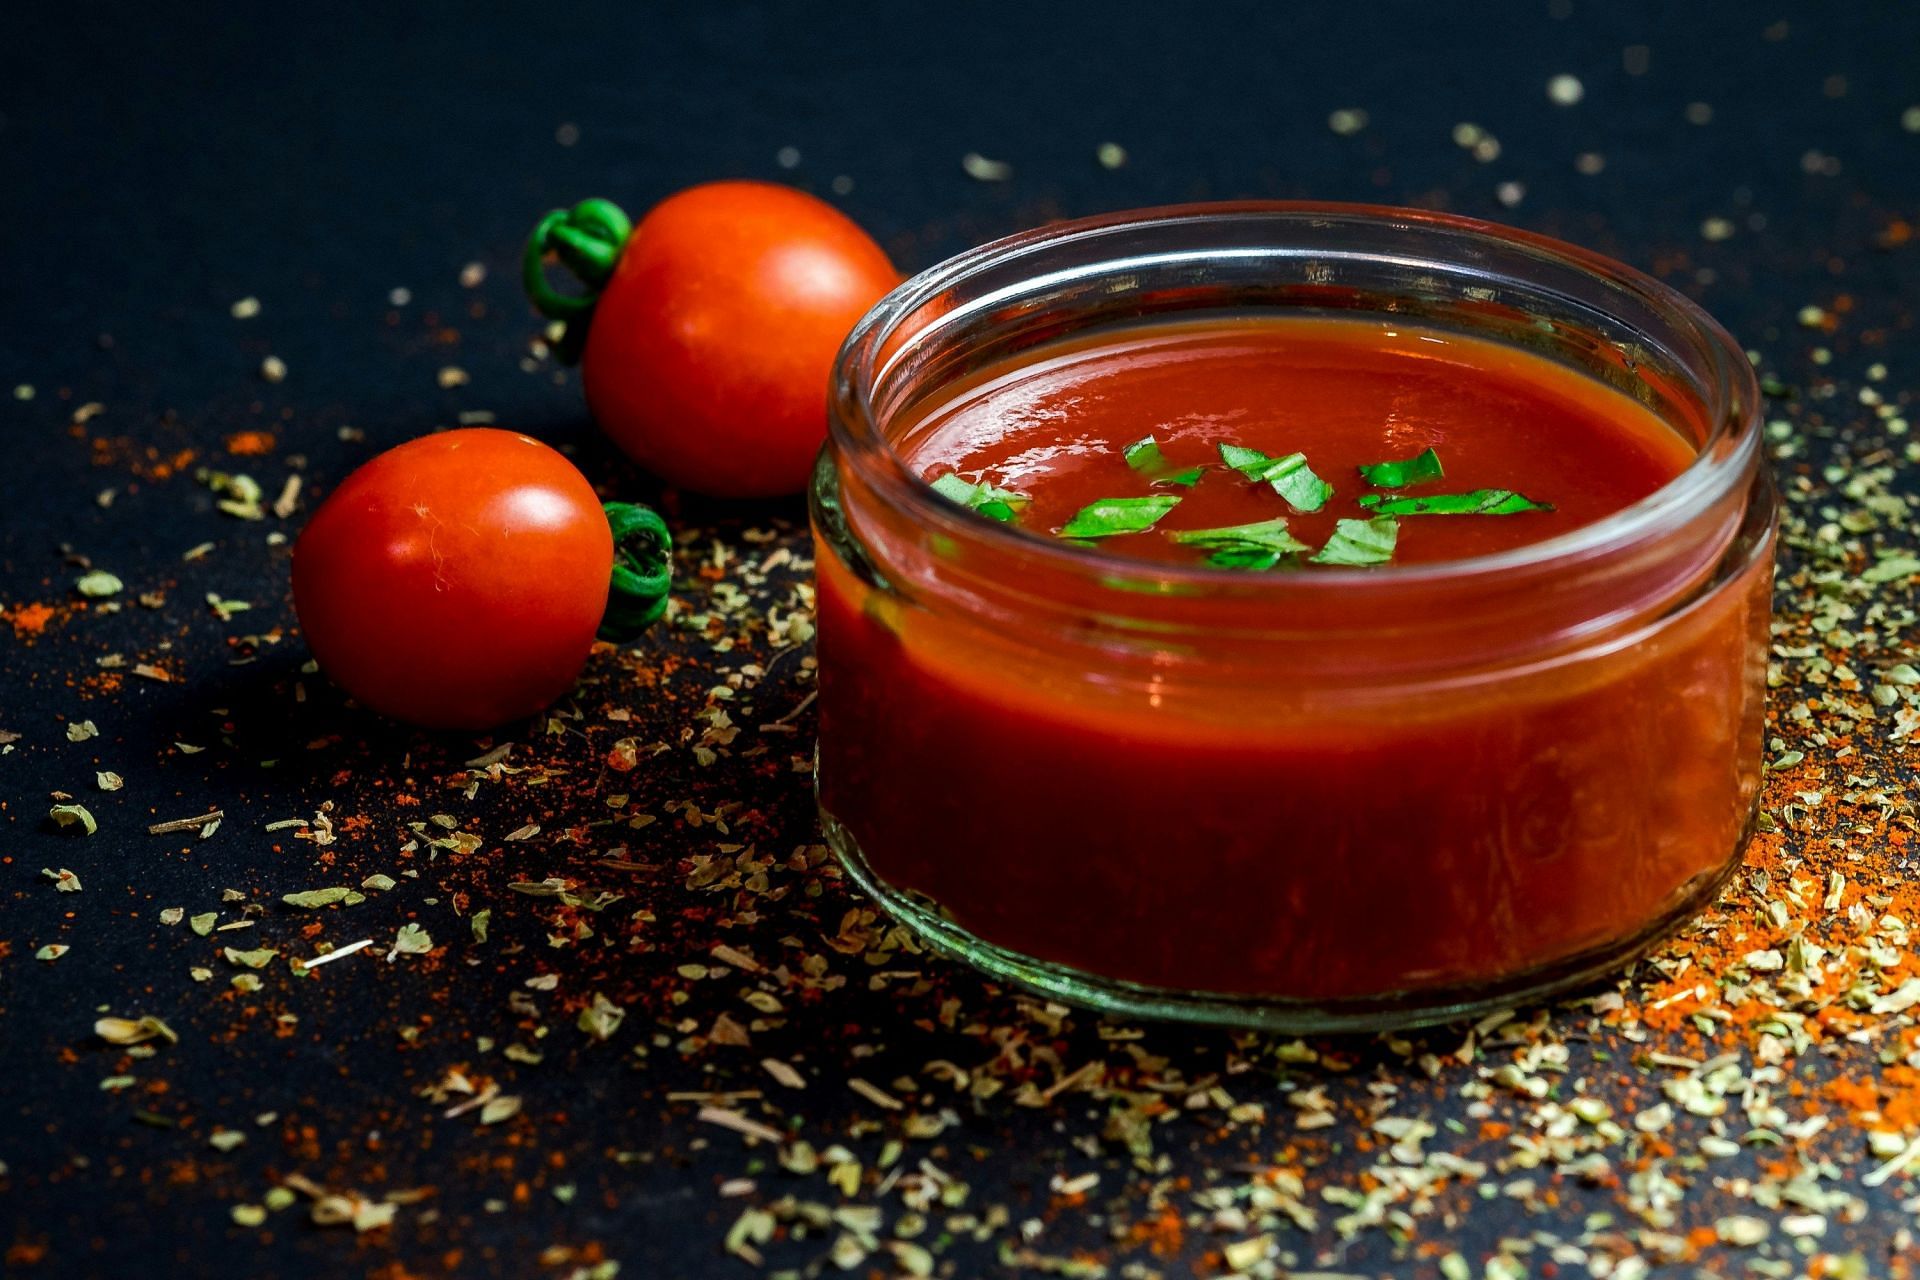 Tomato sauce has a lot of sodium (Image by Dennis Klein/Unsplash)